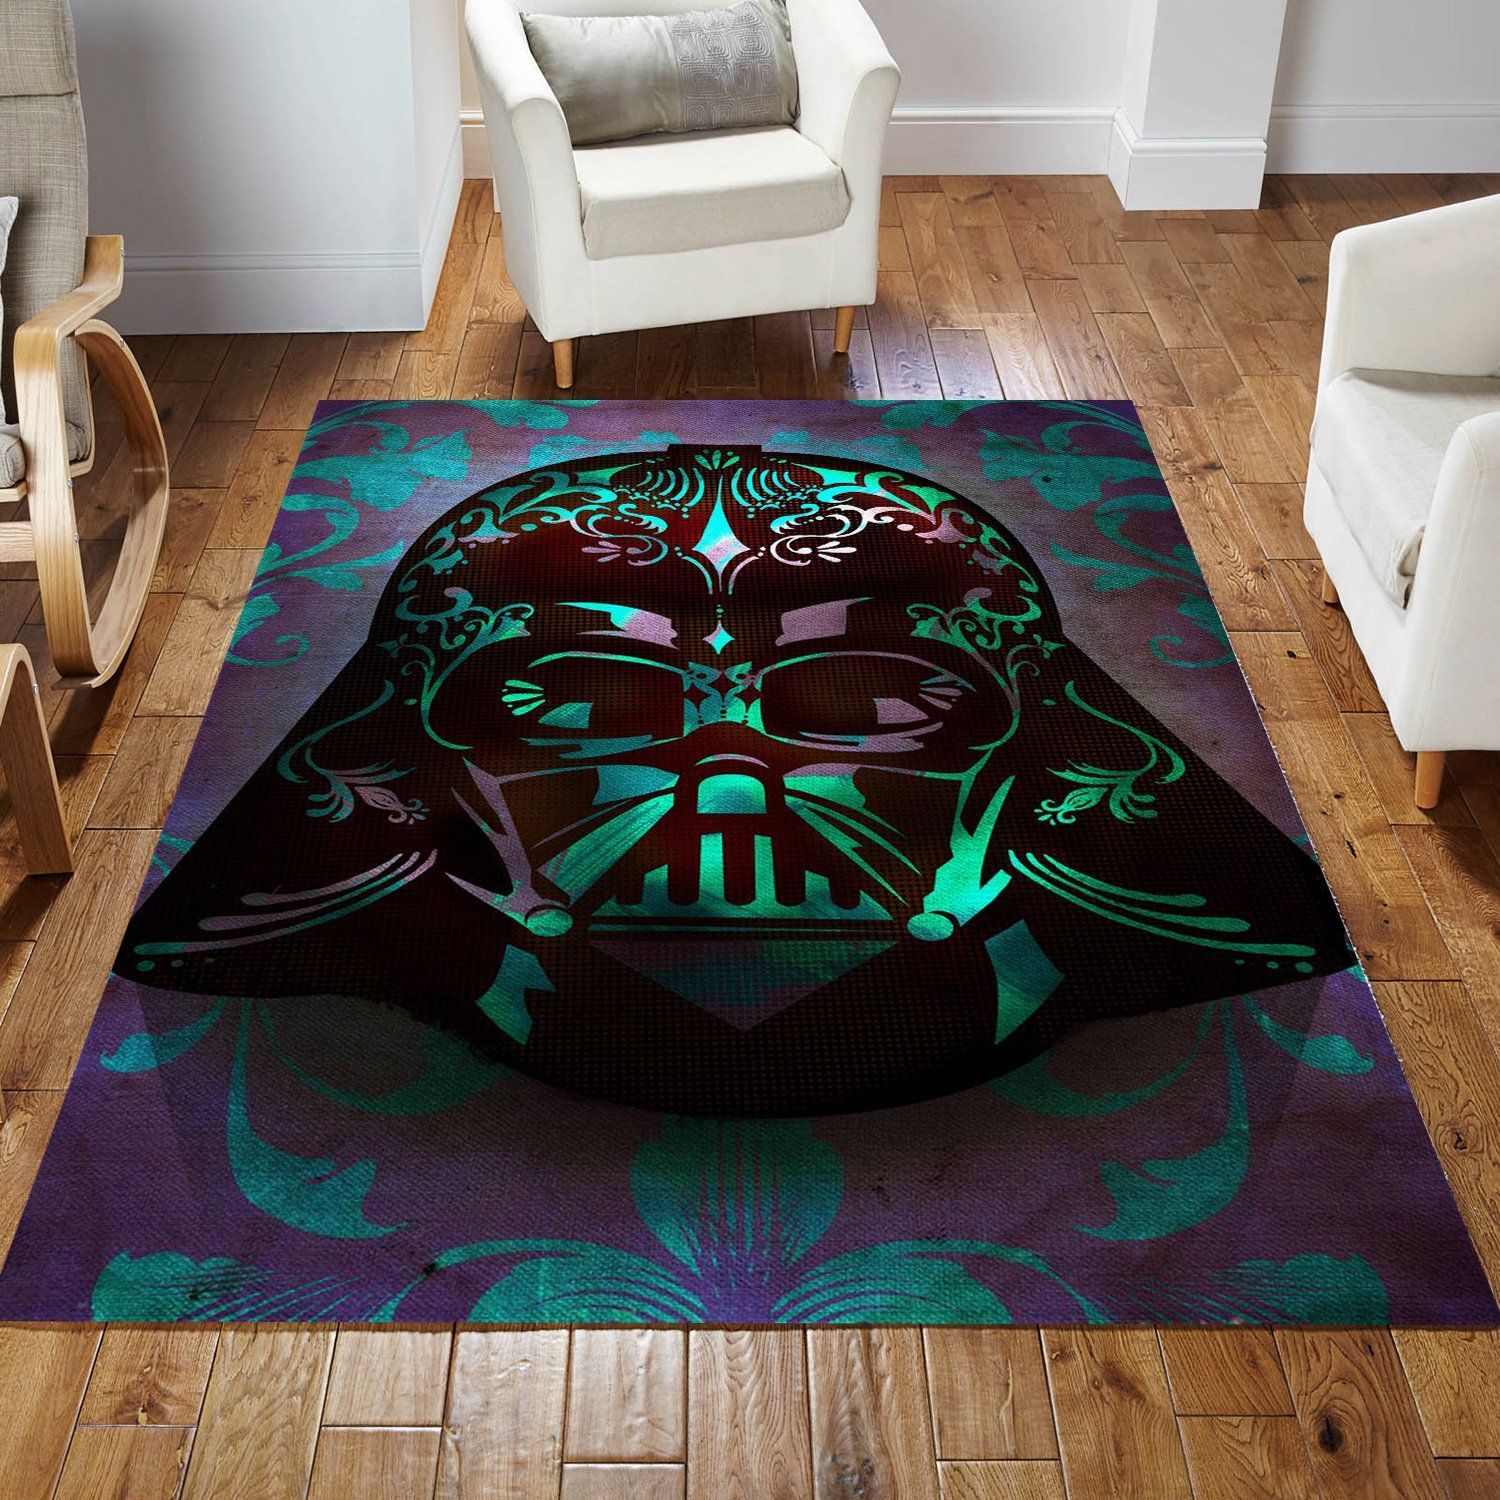 Vader Fluid Rug Star Wars Visions Of Darth Vader Rug Home Decor Floor Decor - Indoor Outdoor Rugs 3